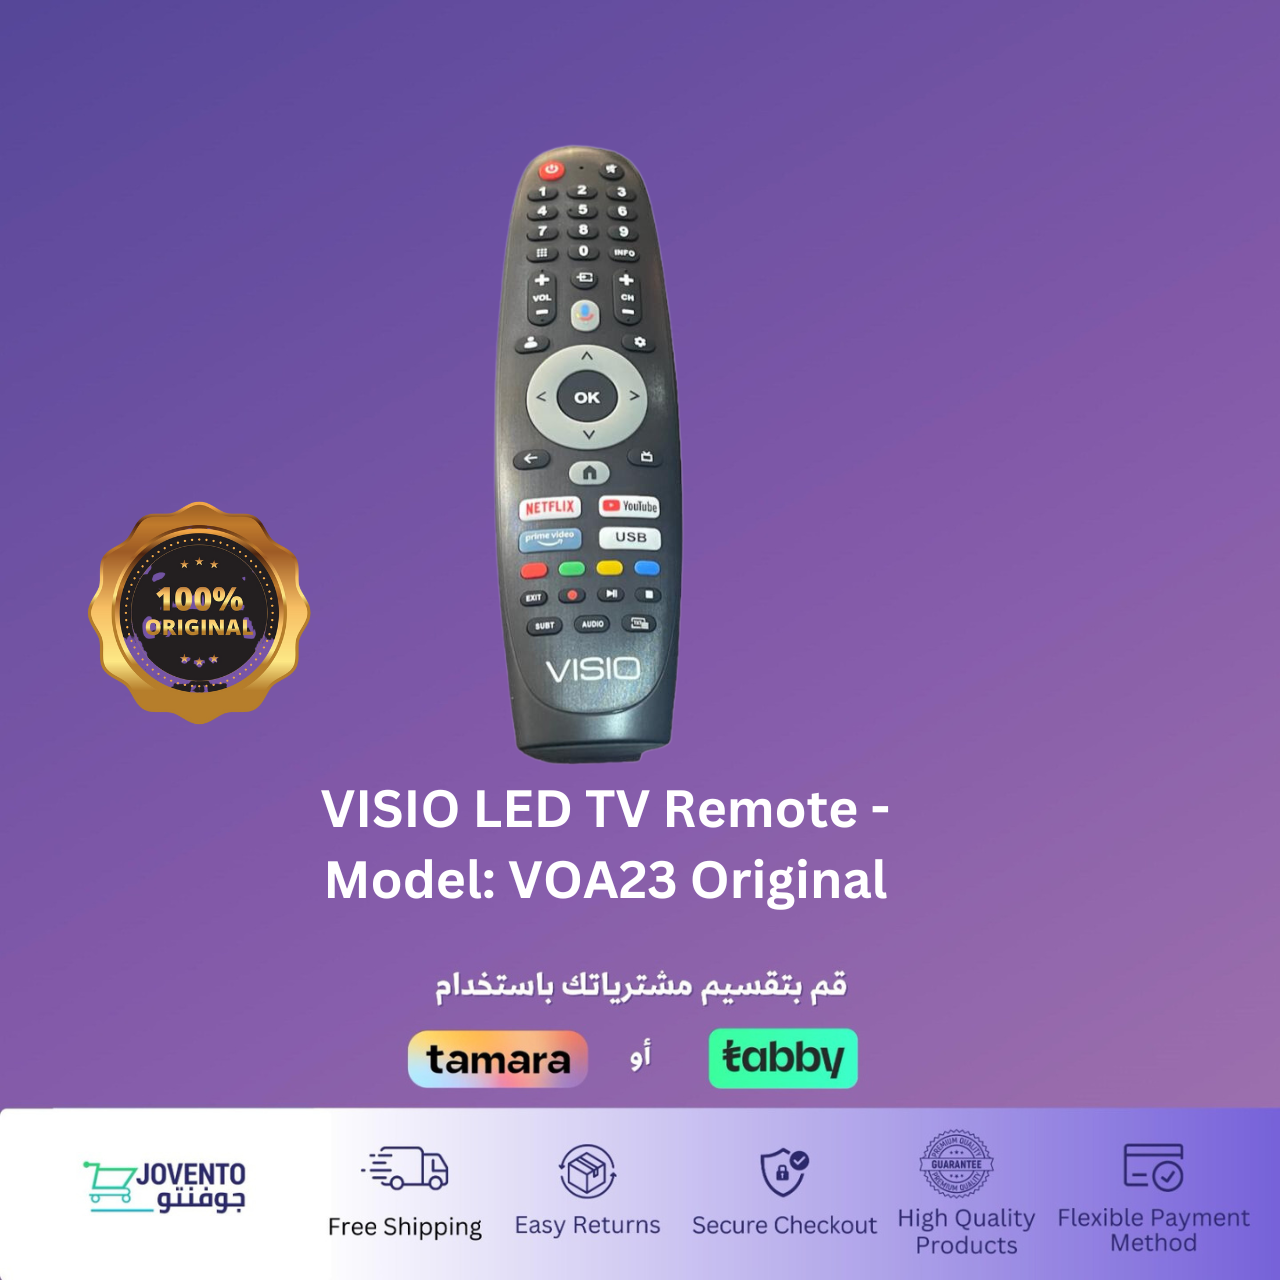 VISIO LED TV Remote - Model: VOA23 Original